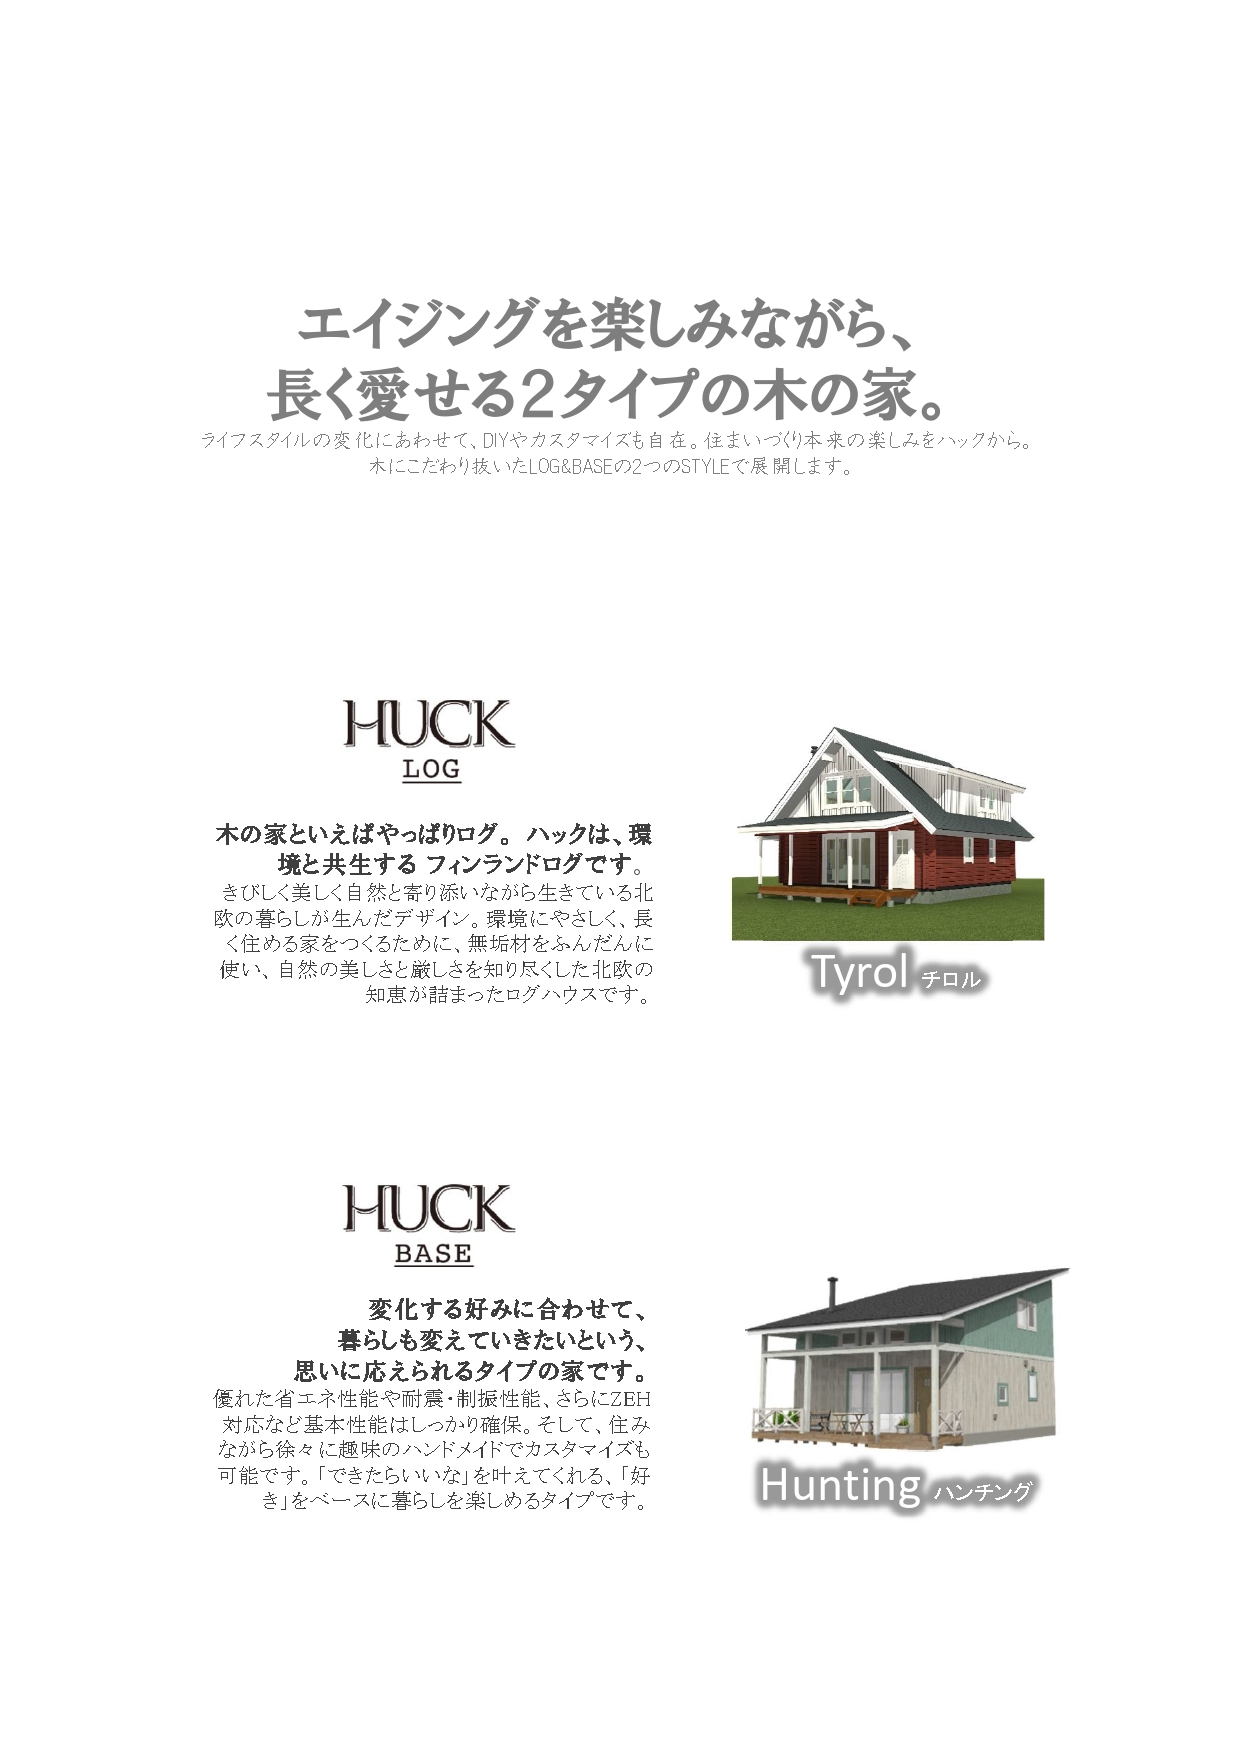 HUCK-Hunting03.jpg